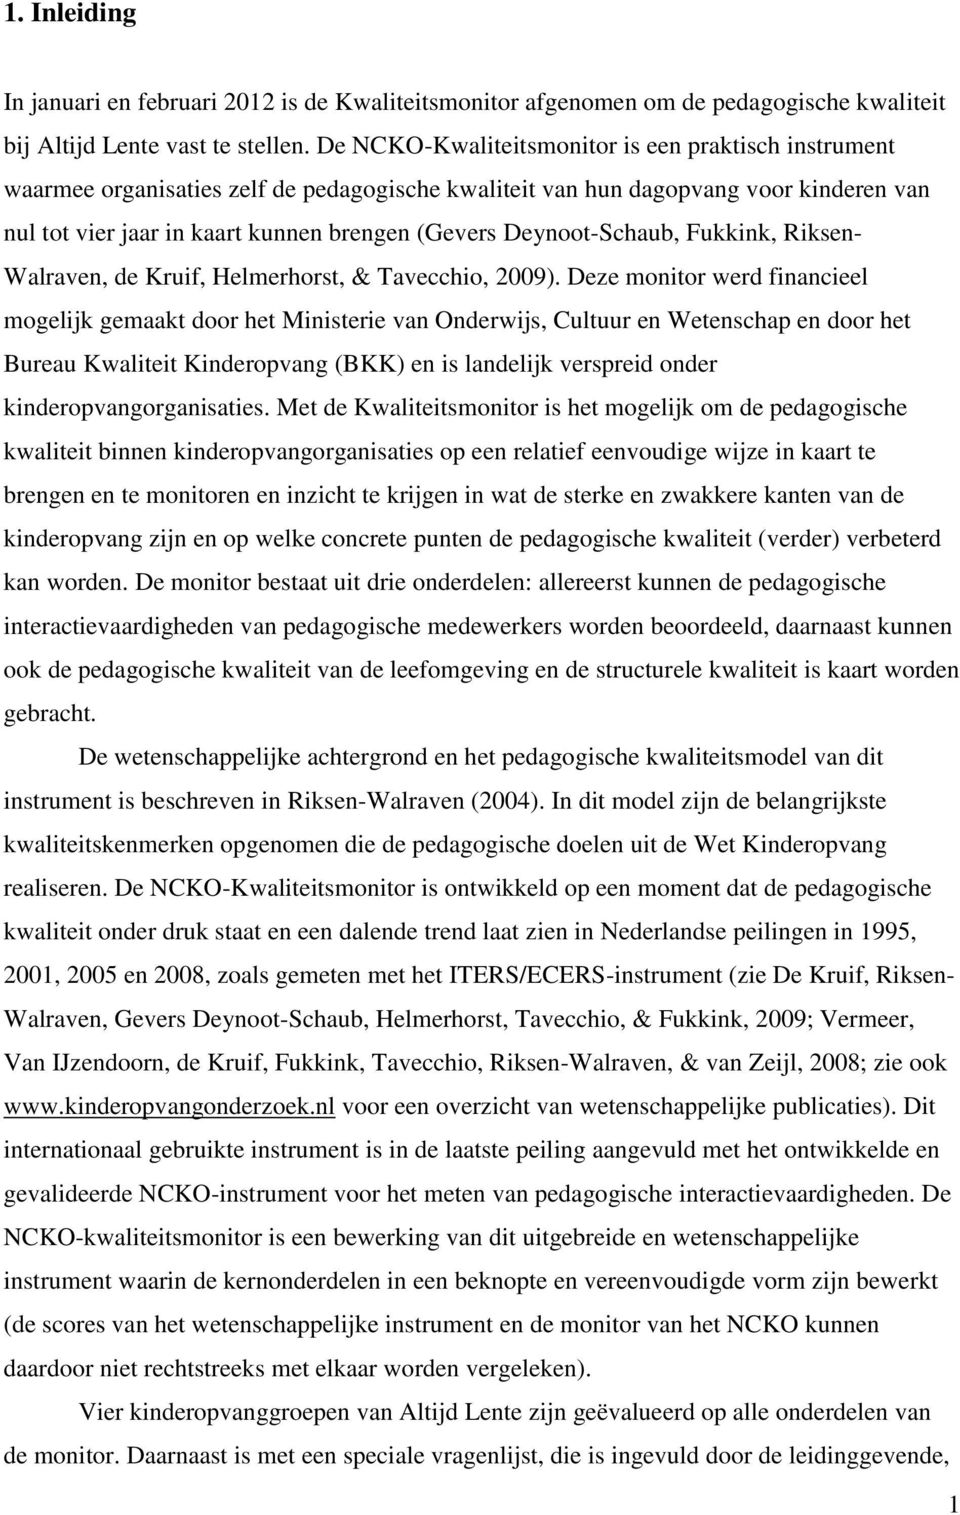 Deynoot-Schaub, Fukkink, Riksen- Walraven, de Kruif, Helmerhorst, & Tavecchio, 2009).